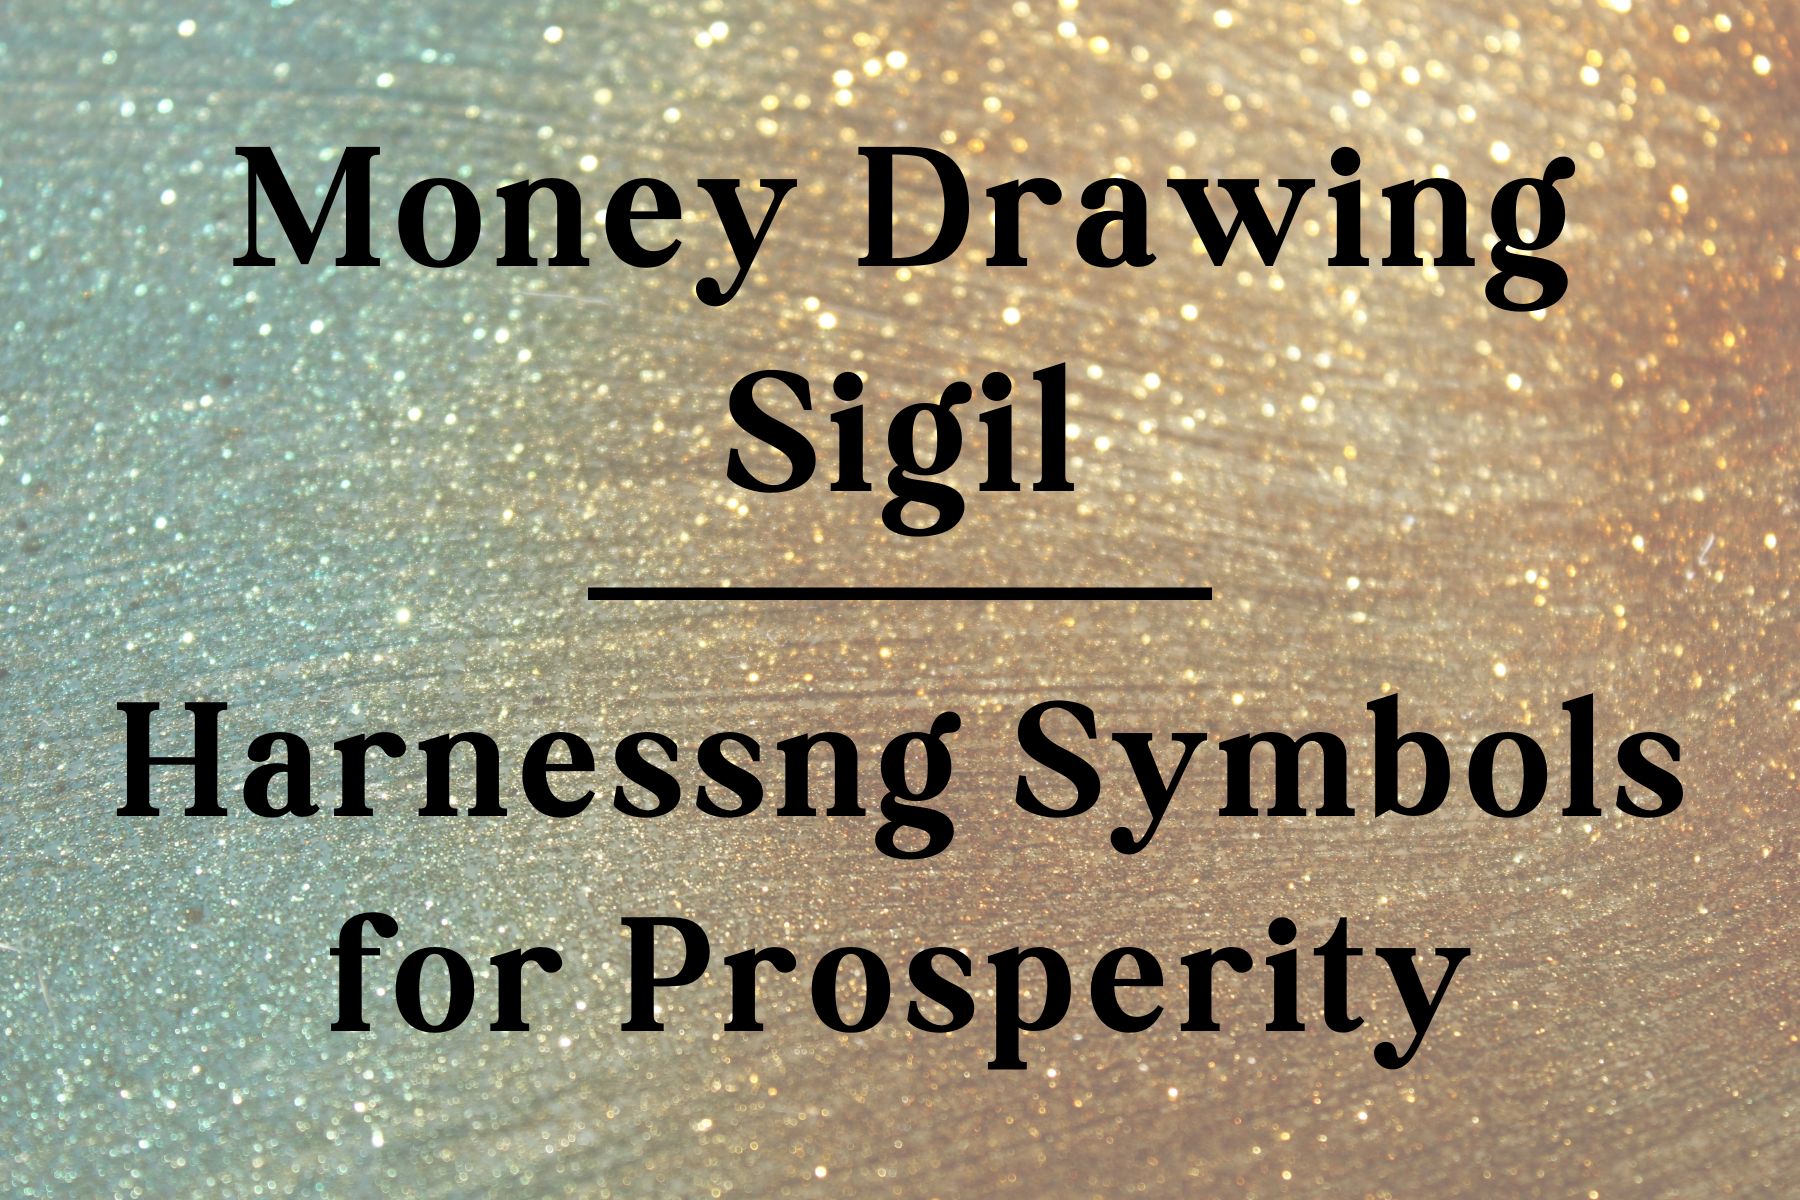 Money-Drawing Sigil: Harnessing Symbols for Prosperity